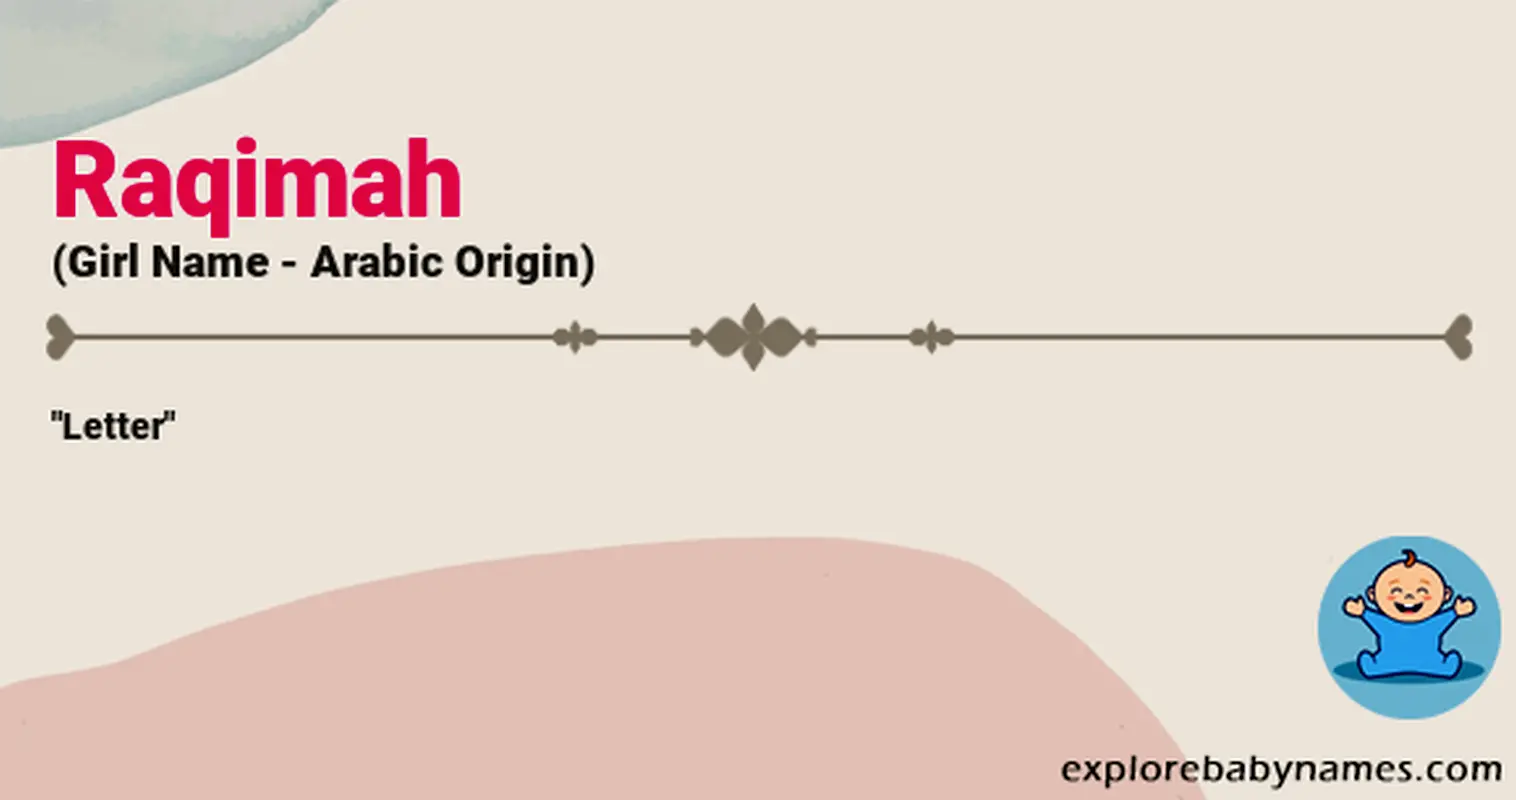 Meaning of Raqimah